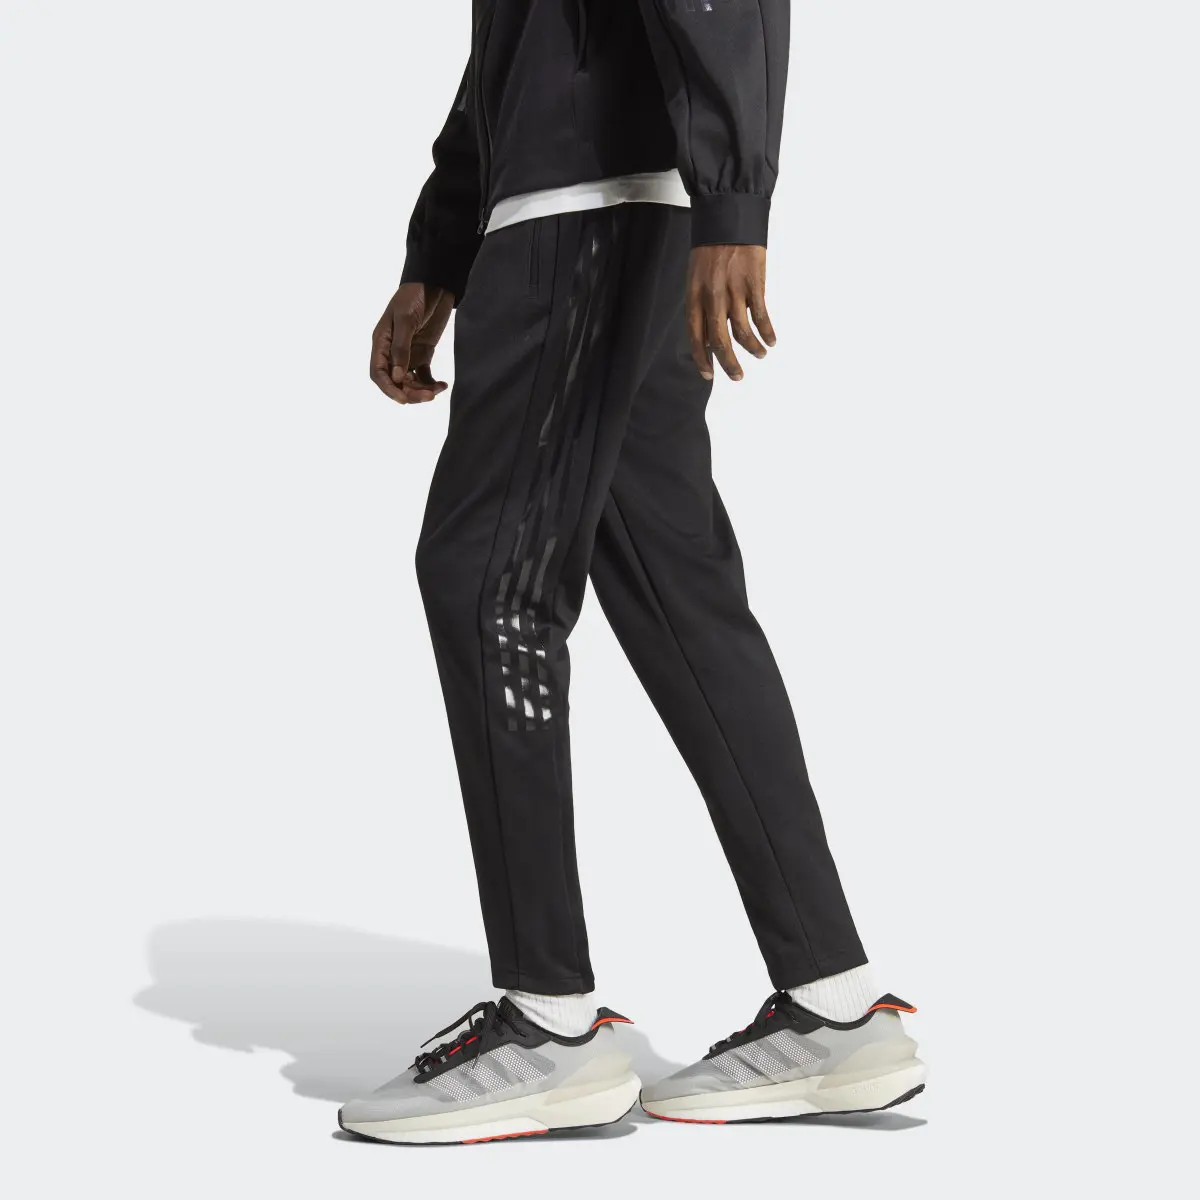 Adidas Tiro Suit-Up Advanced Track Pants. 2